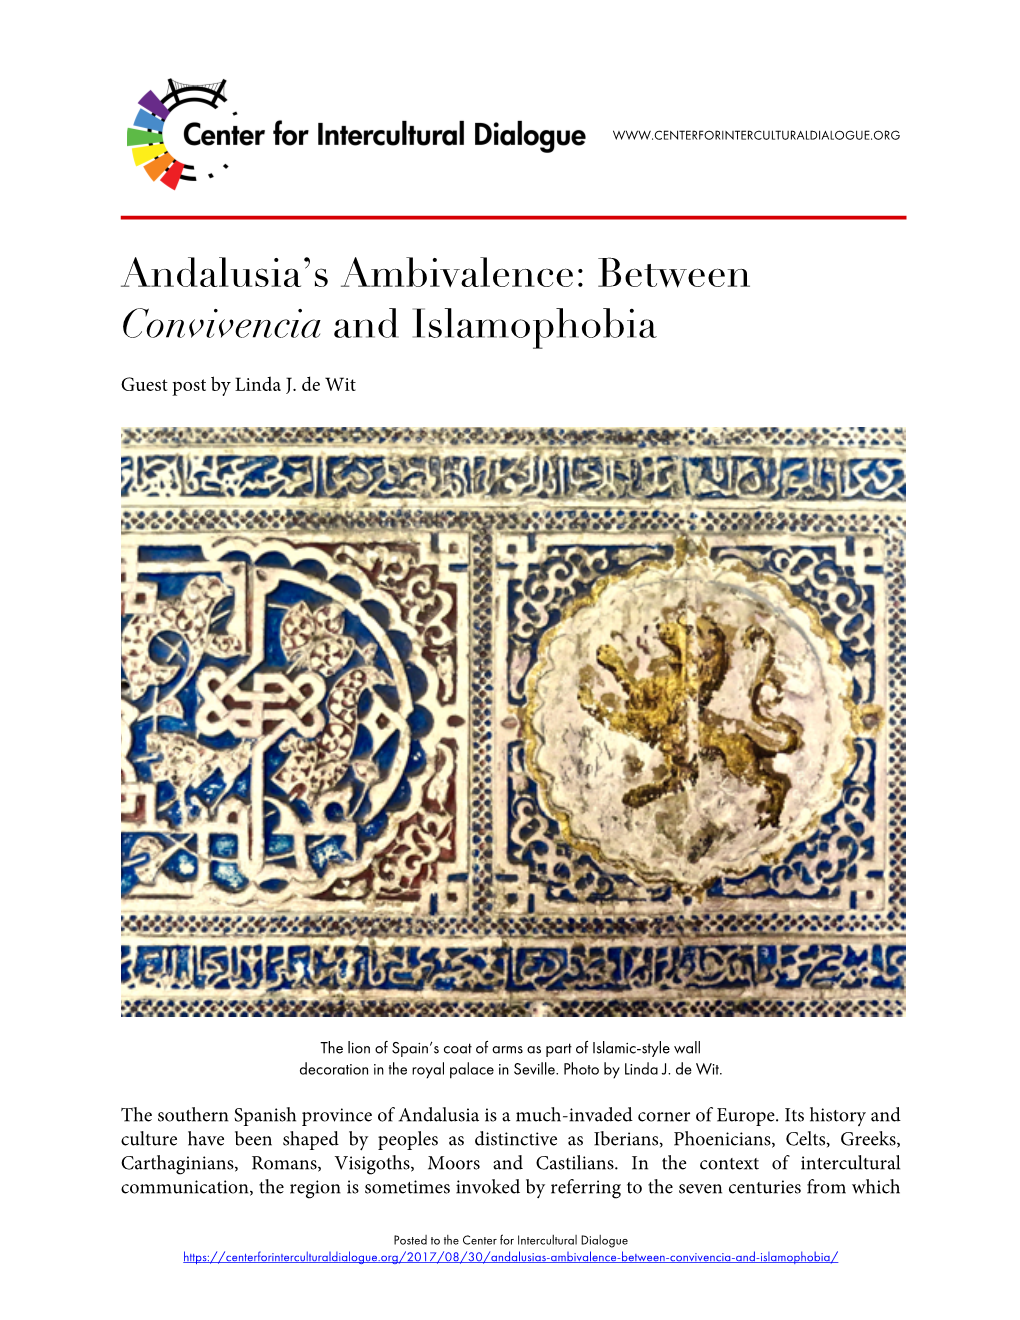 Andalusia's Ambivalence: Between Convivencia and Islamophobia